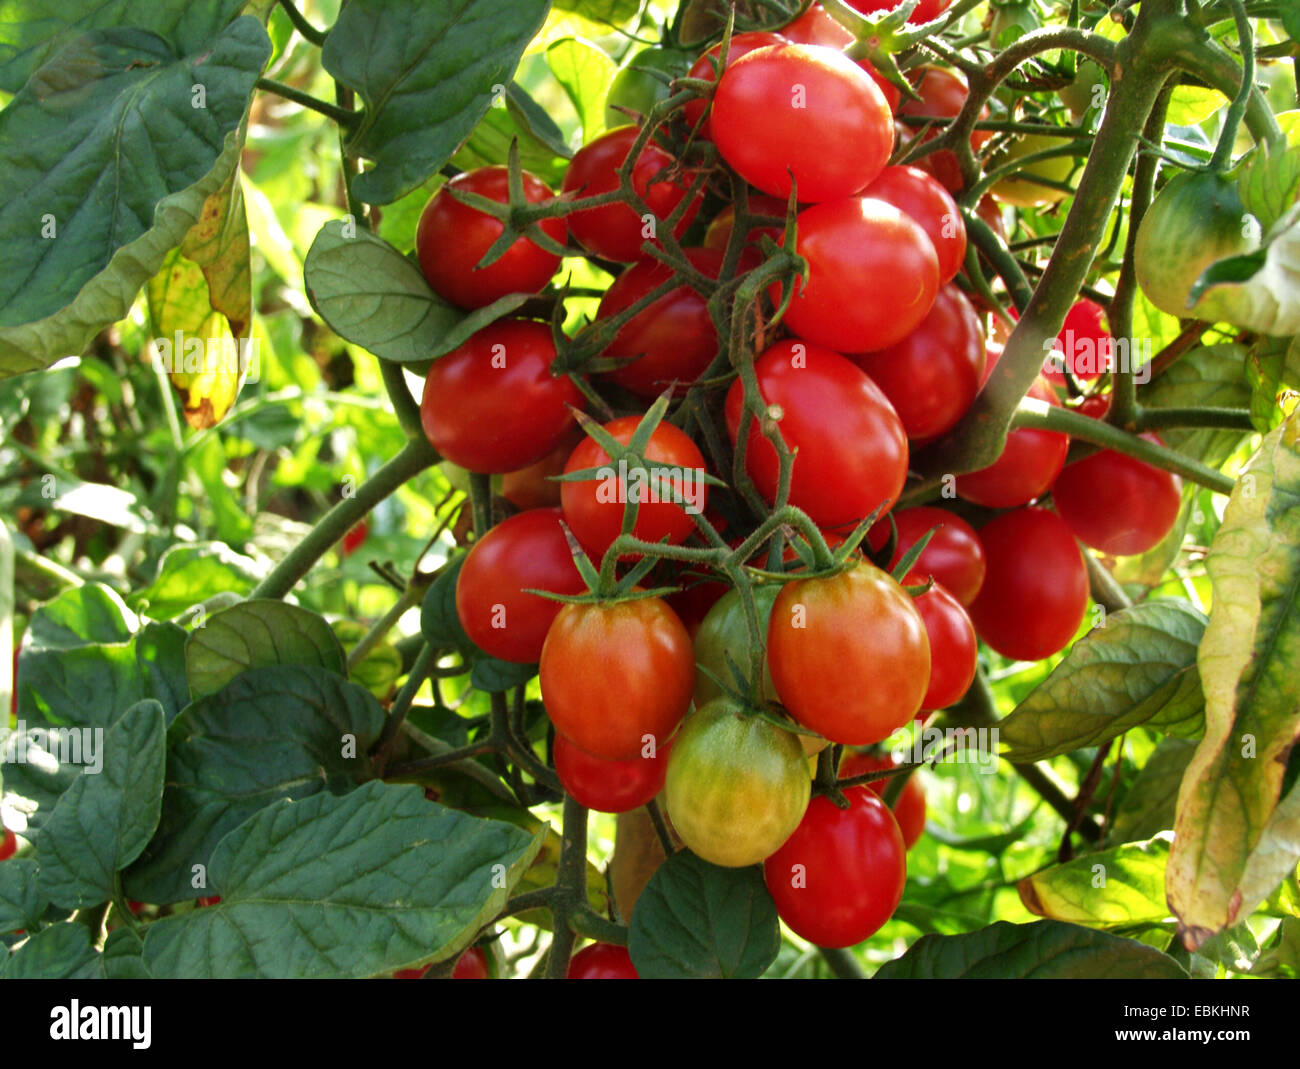 tomato (Lycopersicon lycopersicum), tomatoes at the plant Stock Photo